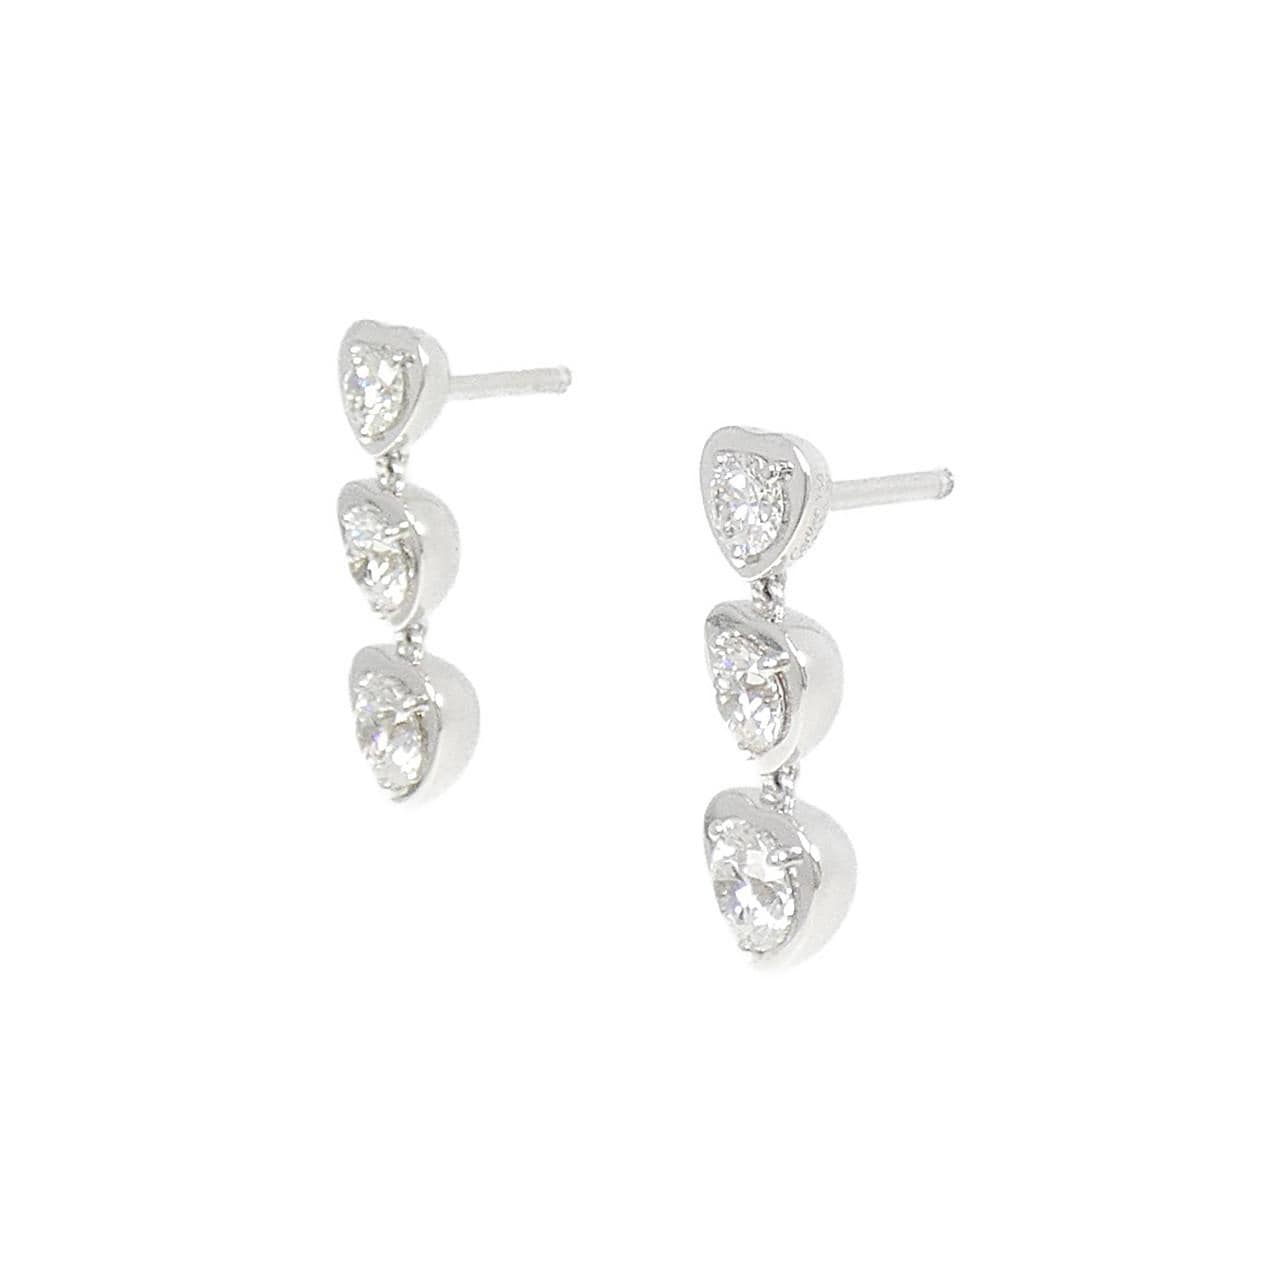 Cartier diamant leger earrings